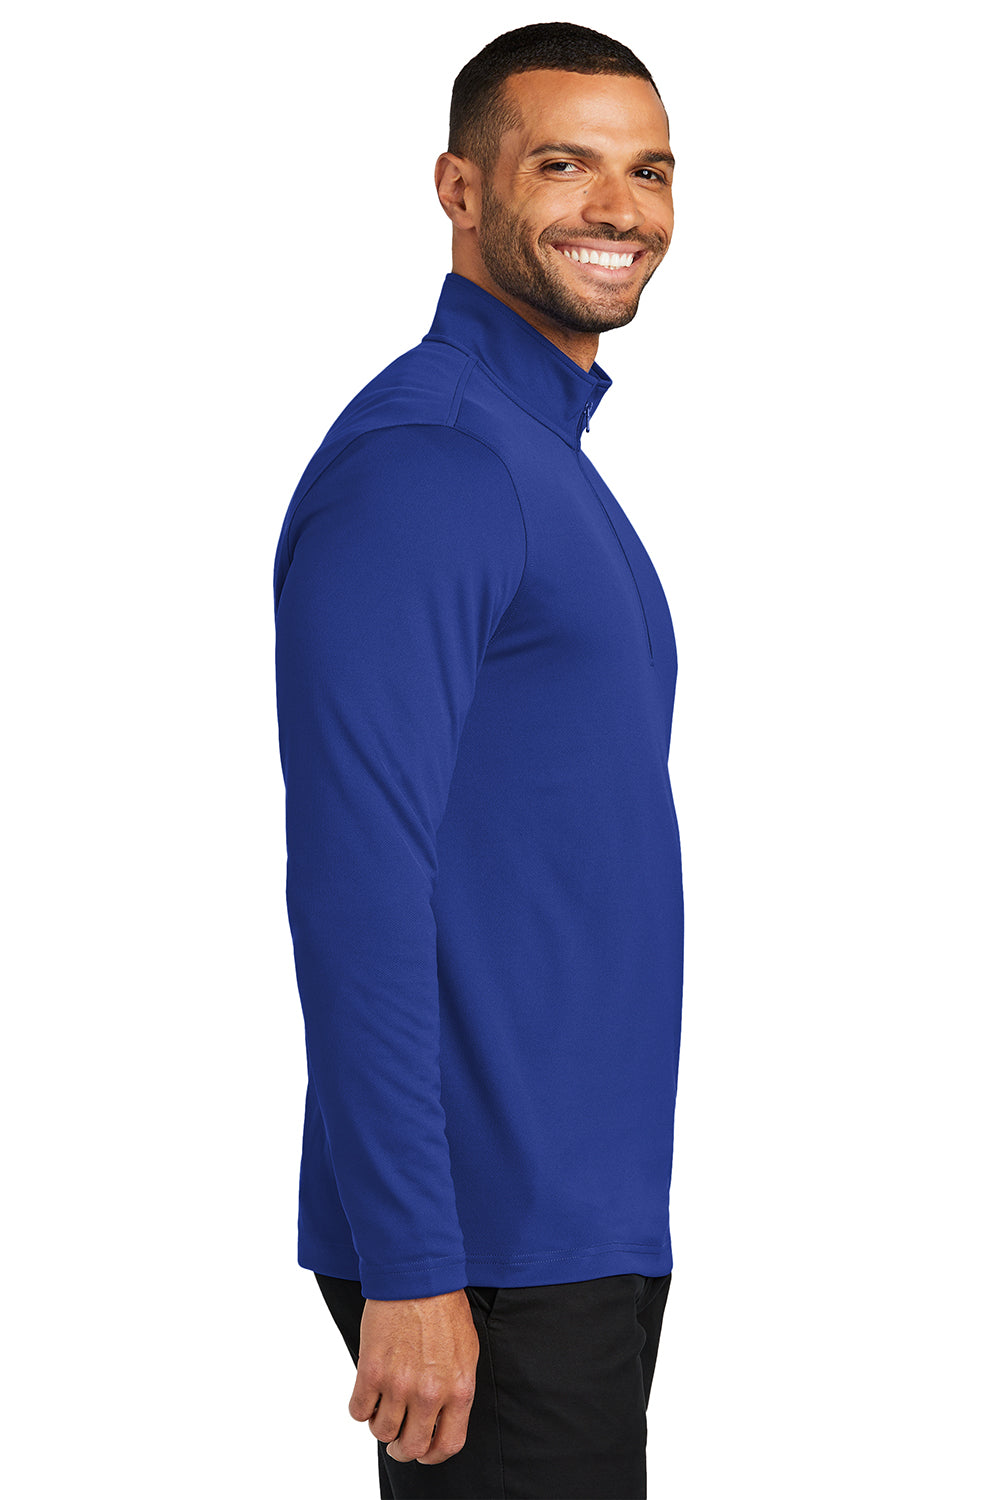 Port Authority K112 Mens Dry Zone UV Micro Mesh 1/4 Zip Sweatshirt True Royal Blue Side